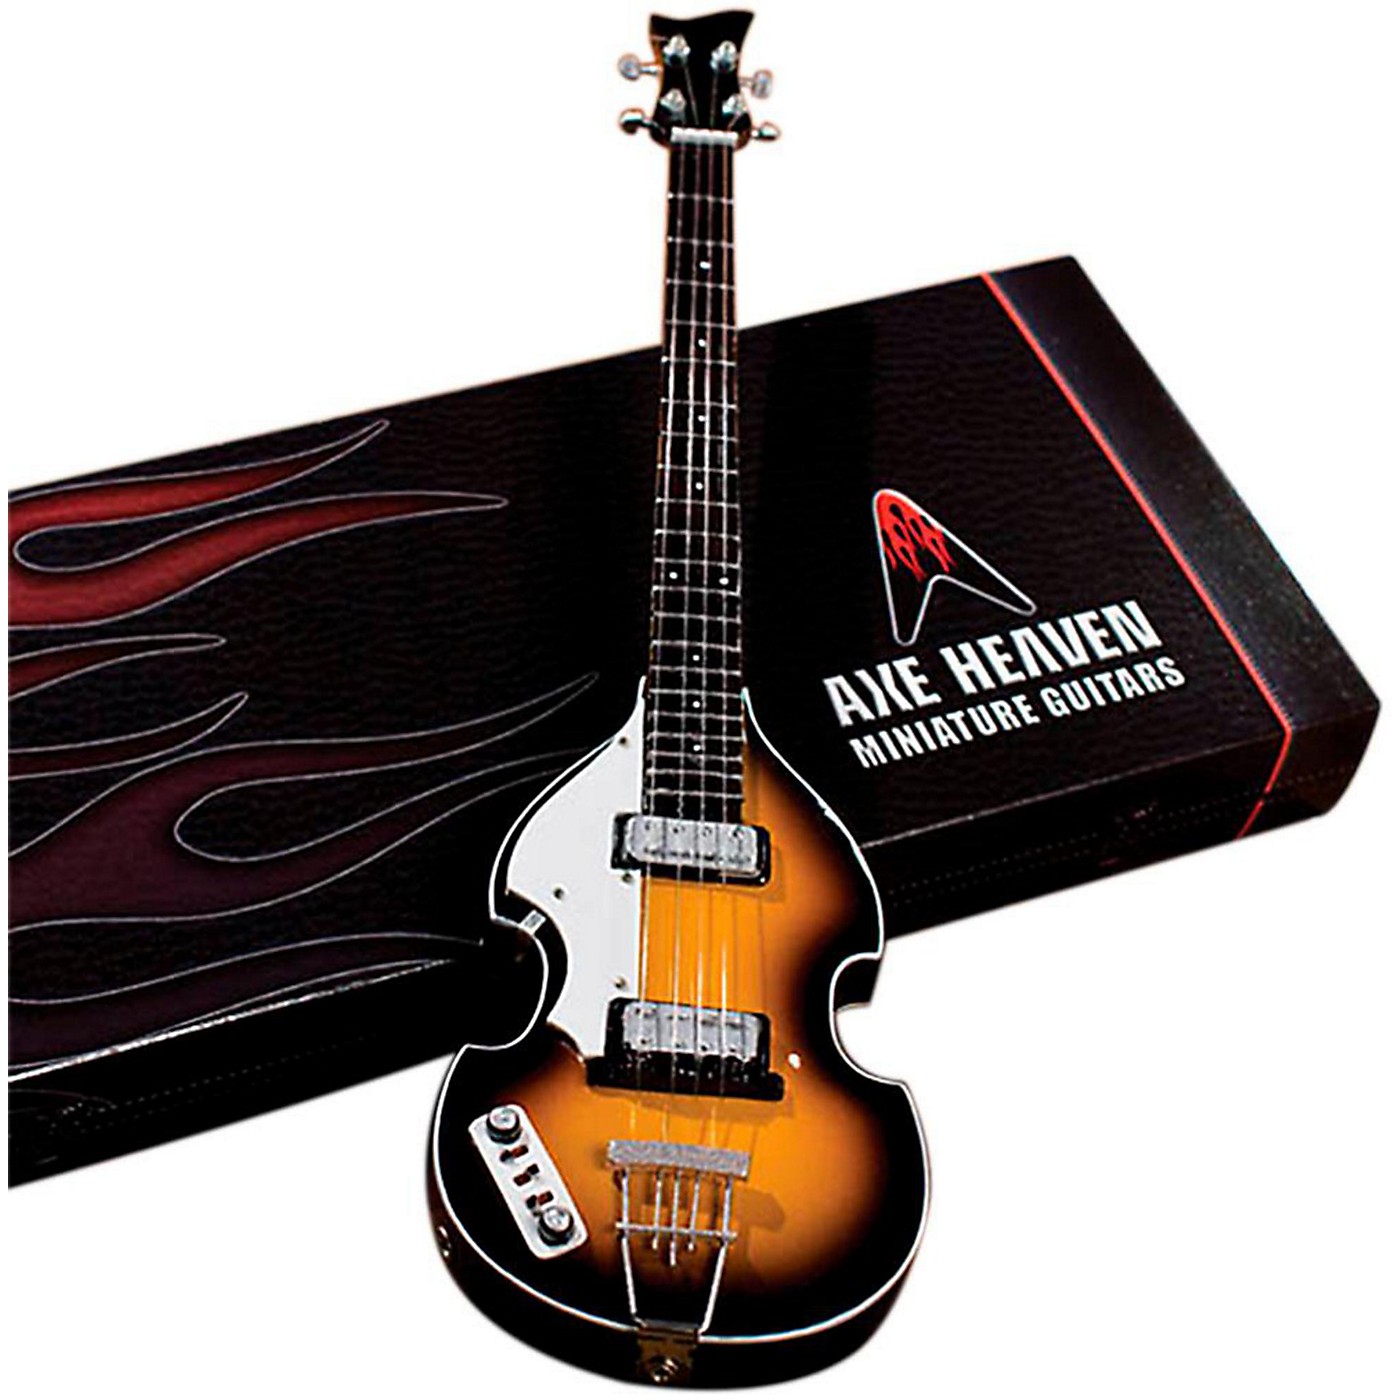 Axe Heaven Paul McCartney Original Violin Bass Miniature Guitar Replica Collectible thumbnail